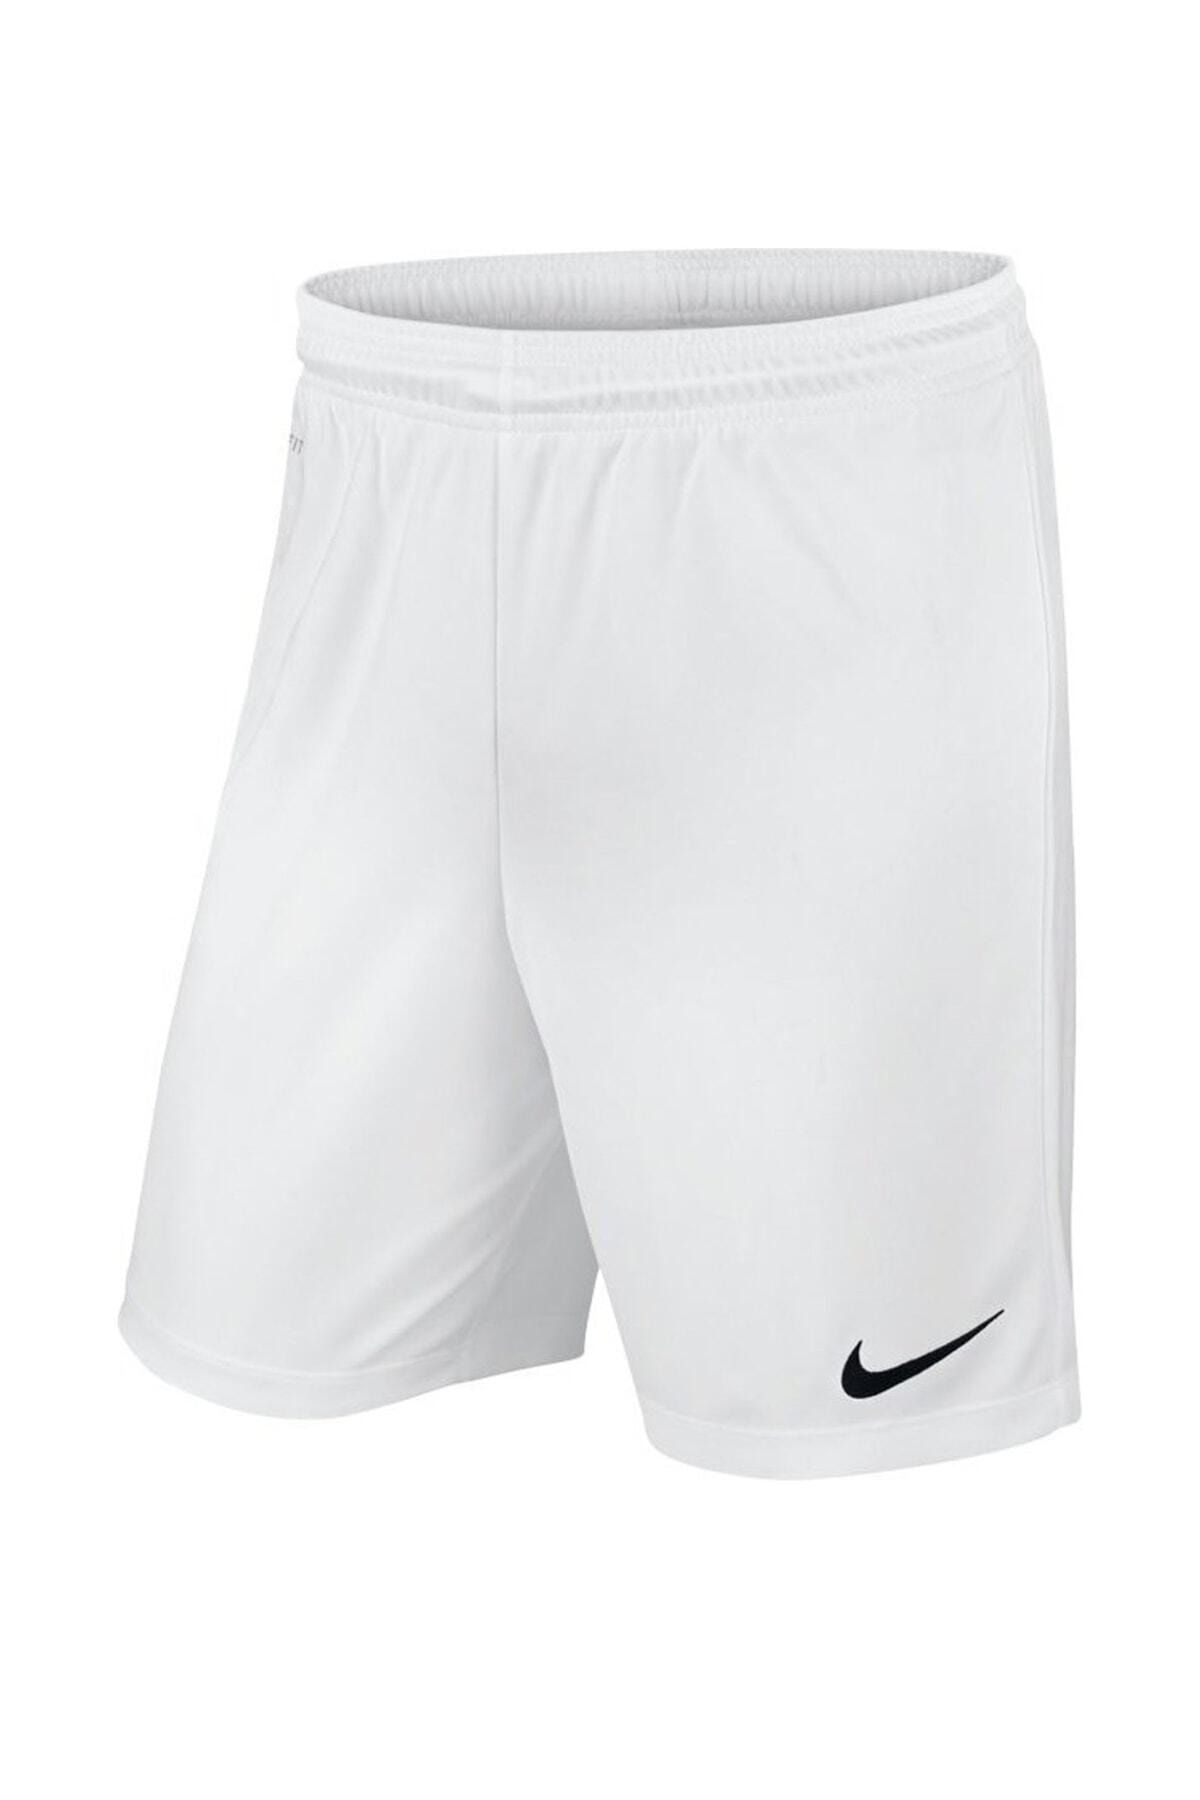 Nike Erkek Şort - Park II Knit WB Futbol Maç Şortu - 725903-100